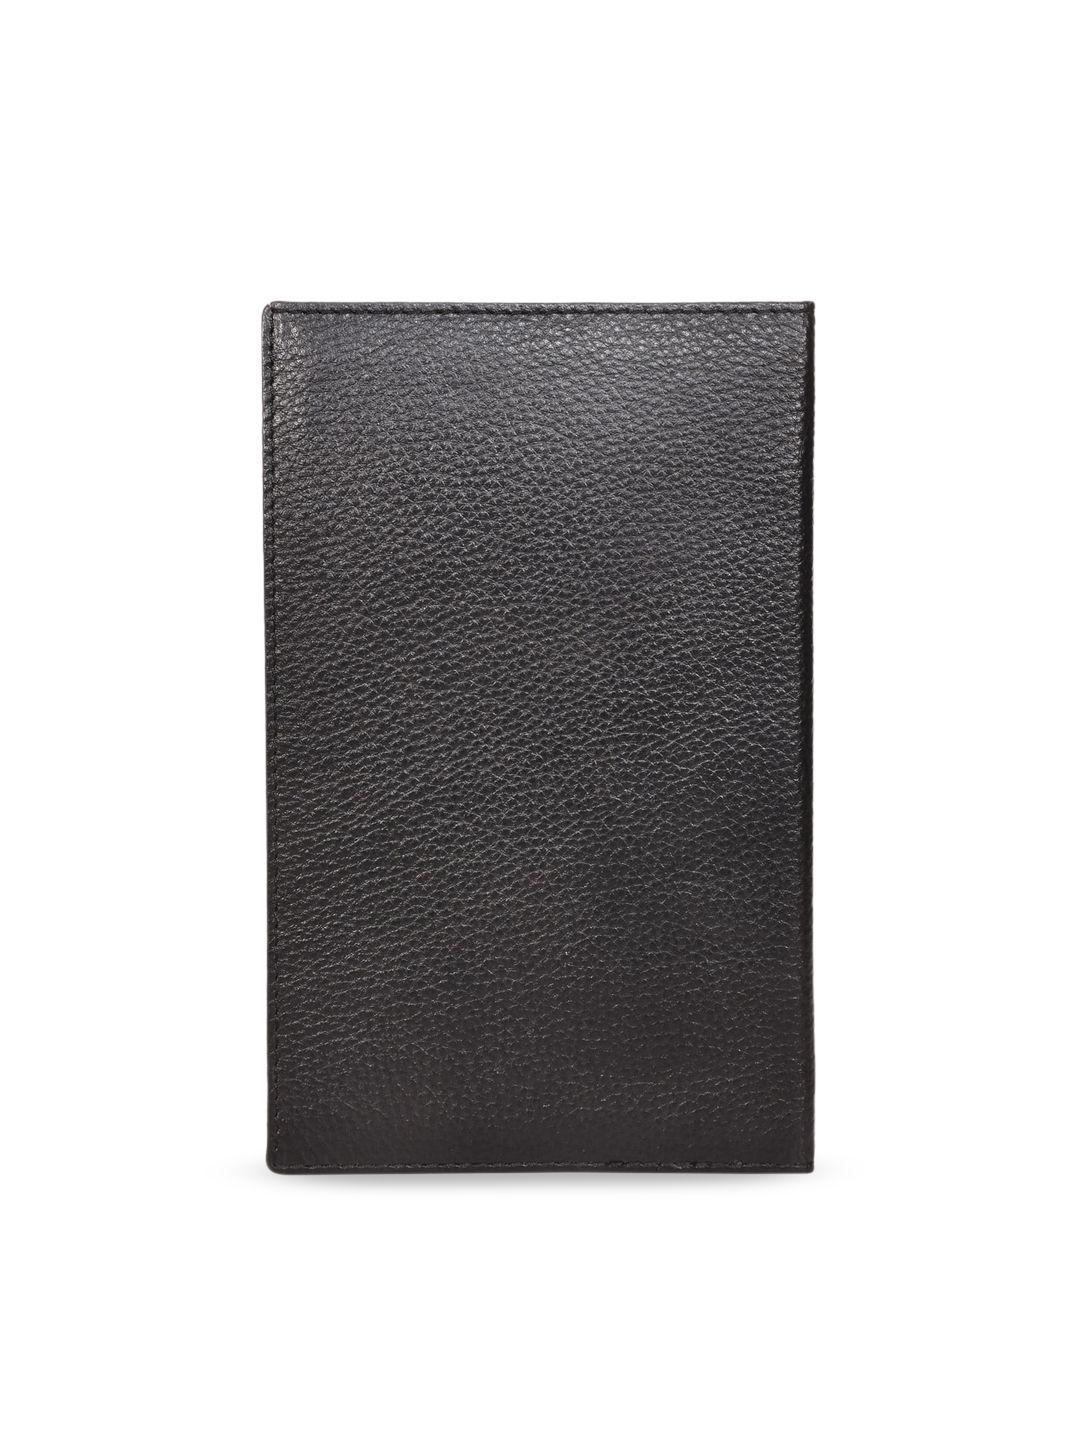 sassora leather rfid travel document holder